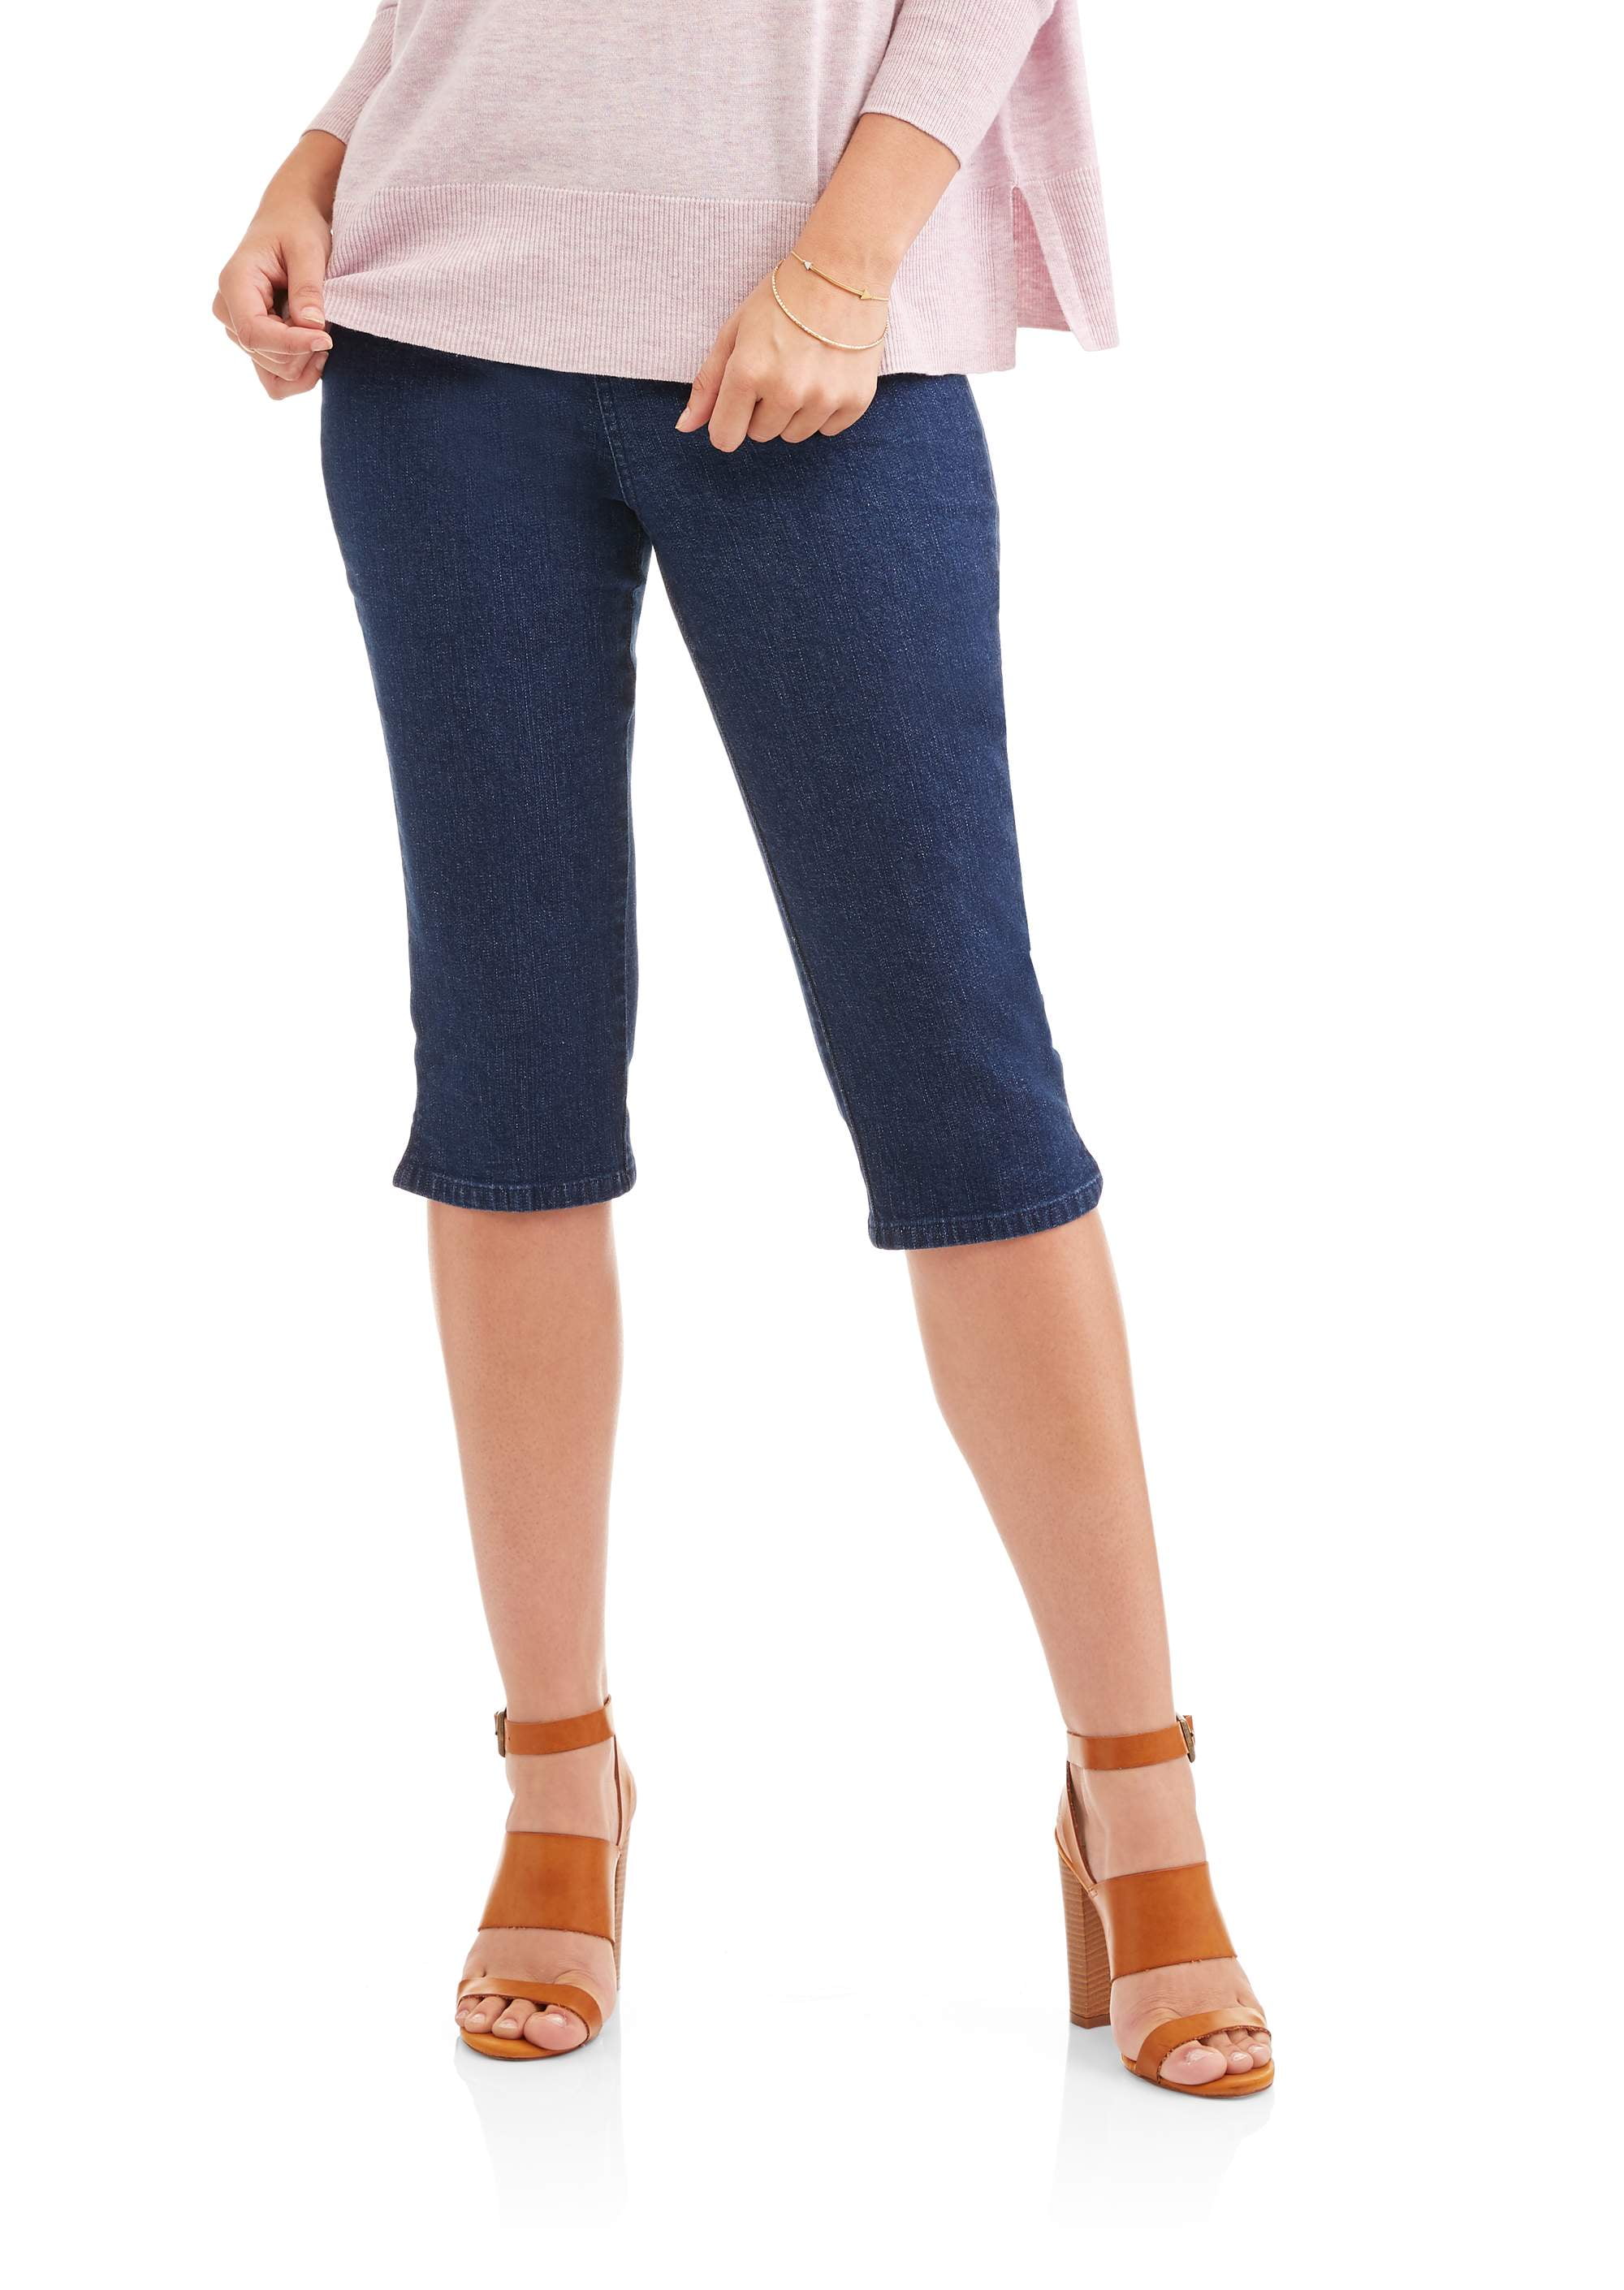 Real Size Women's Pull On Grommet Stretch Capri Pants, 17” 